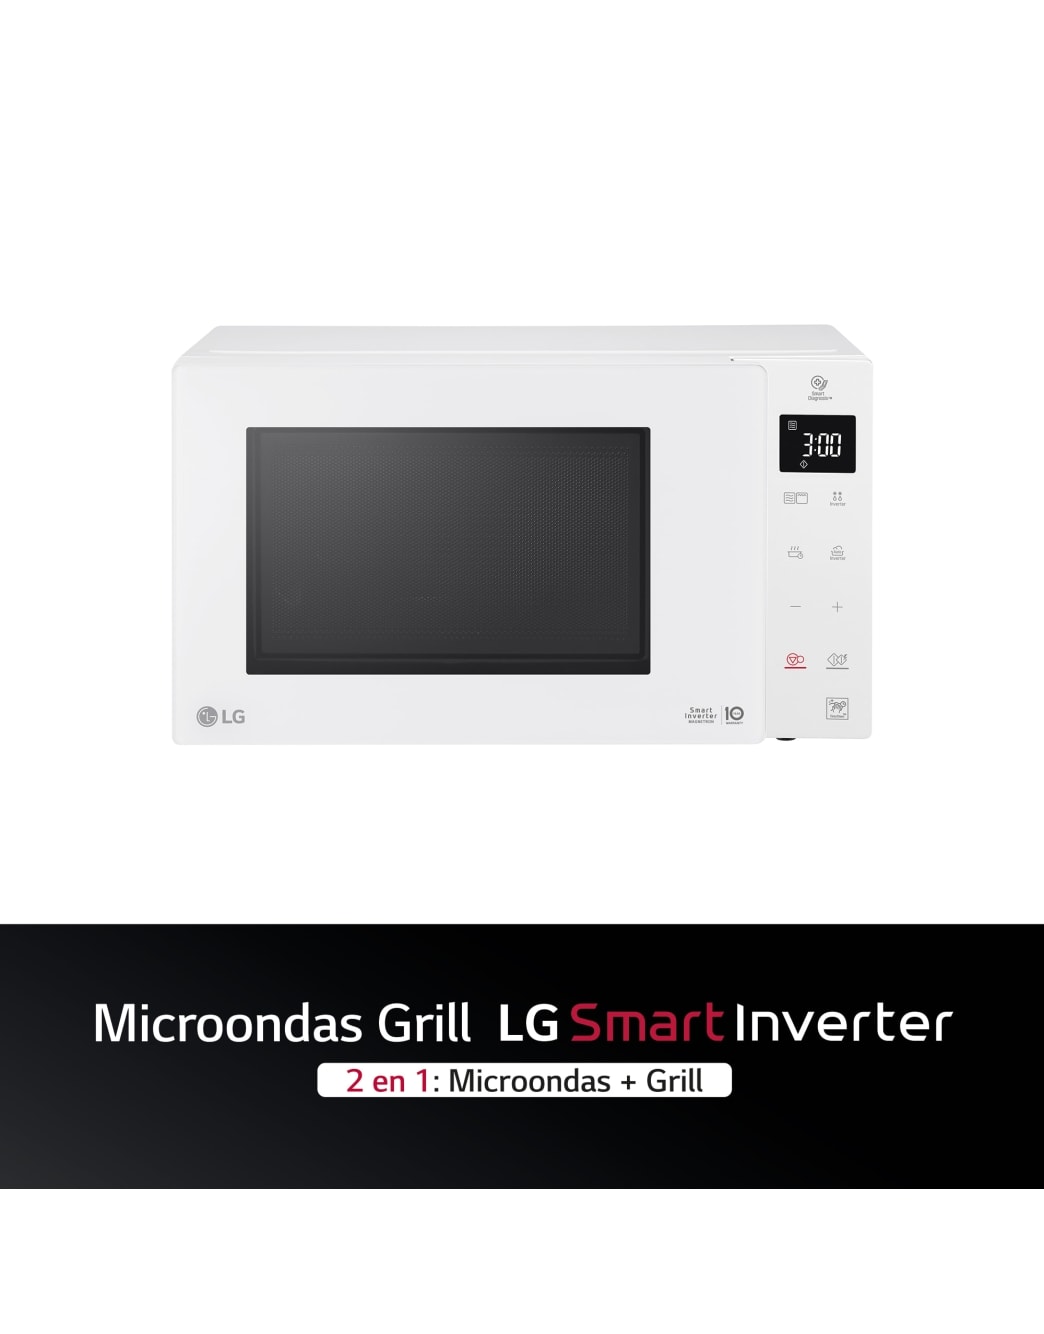 Microondas Grill Inox Smart Inverter 1000W de 25 litros LG